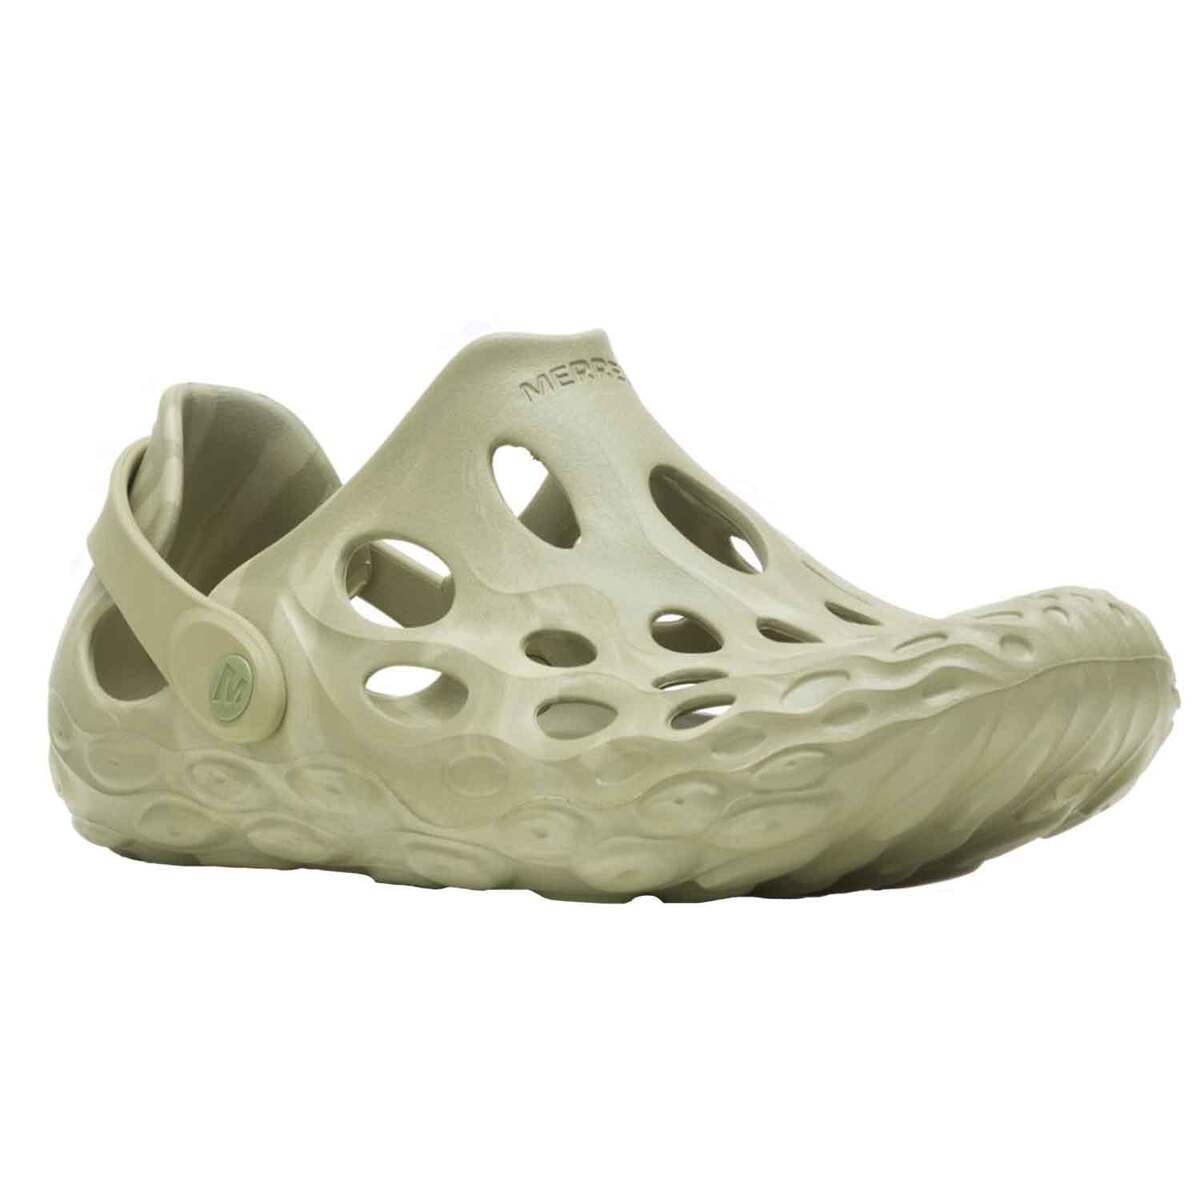 Merrell Men's Hydro Moc Water Shoes | Sportsman's Warehouse